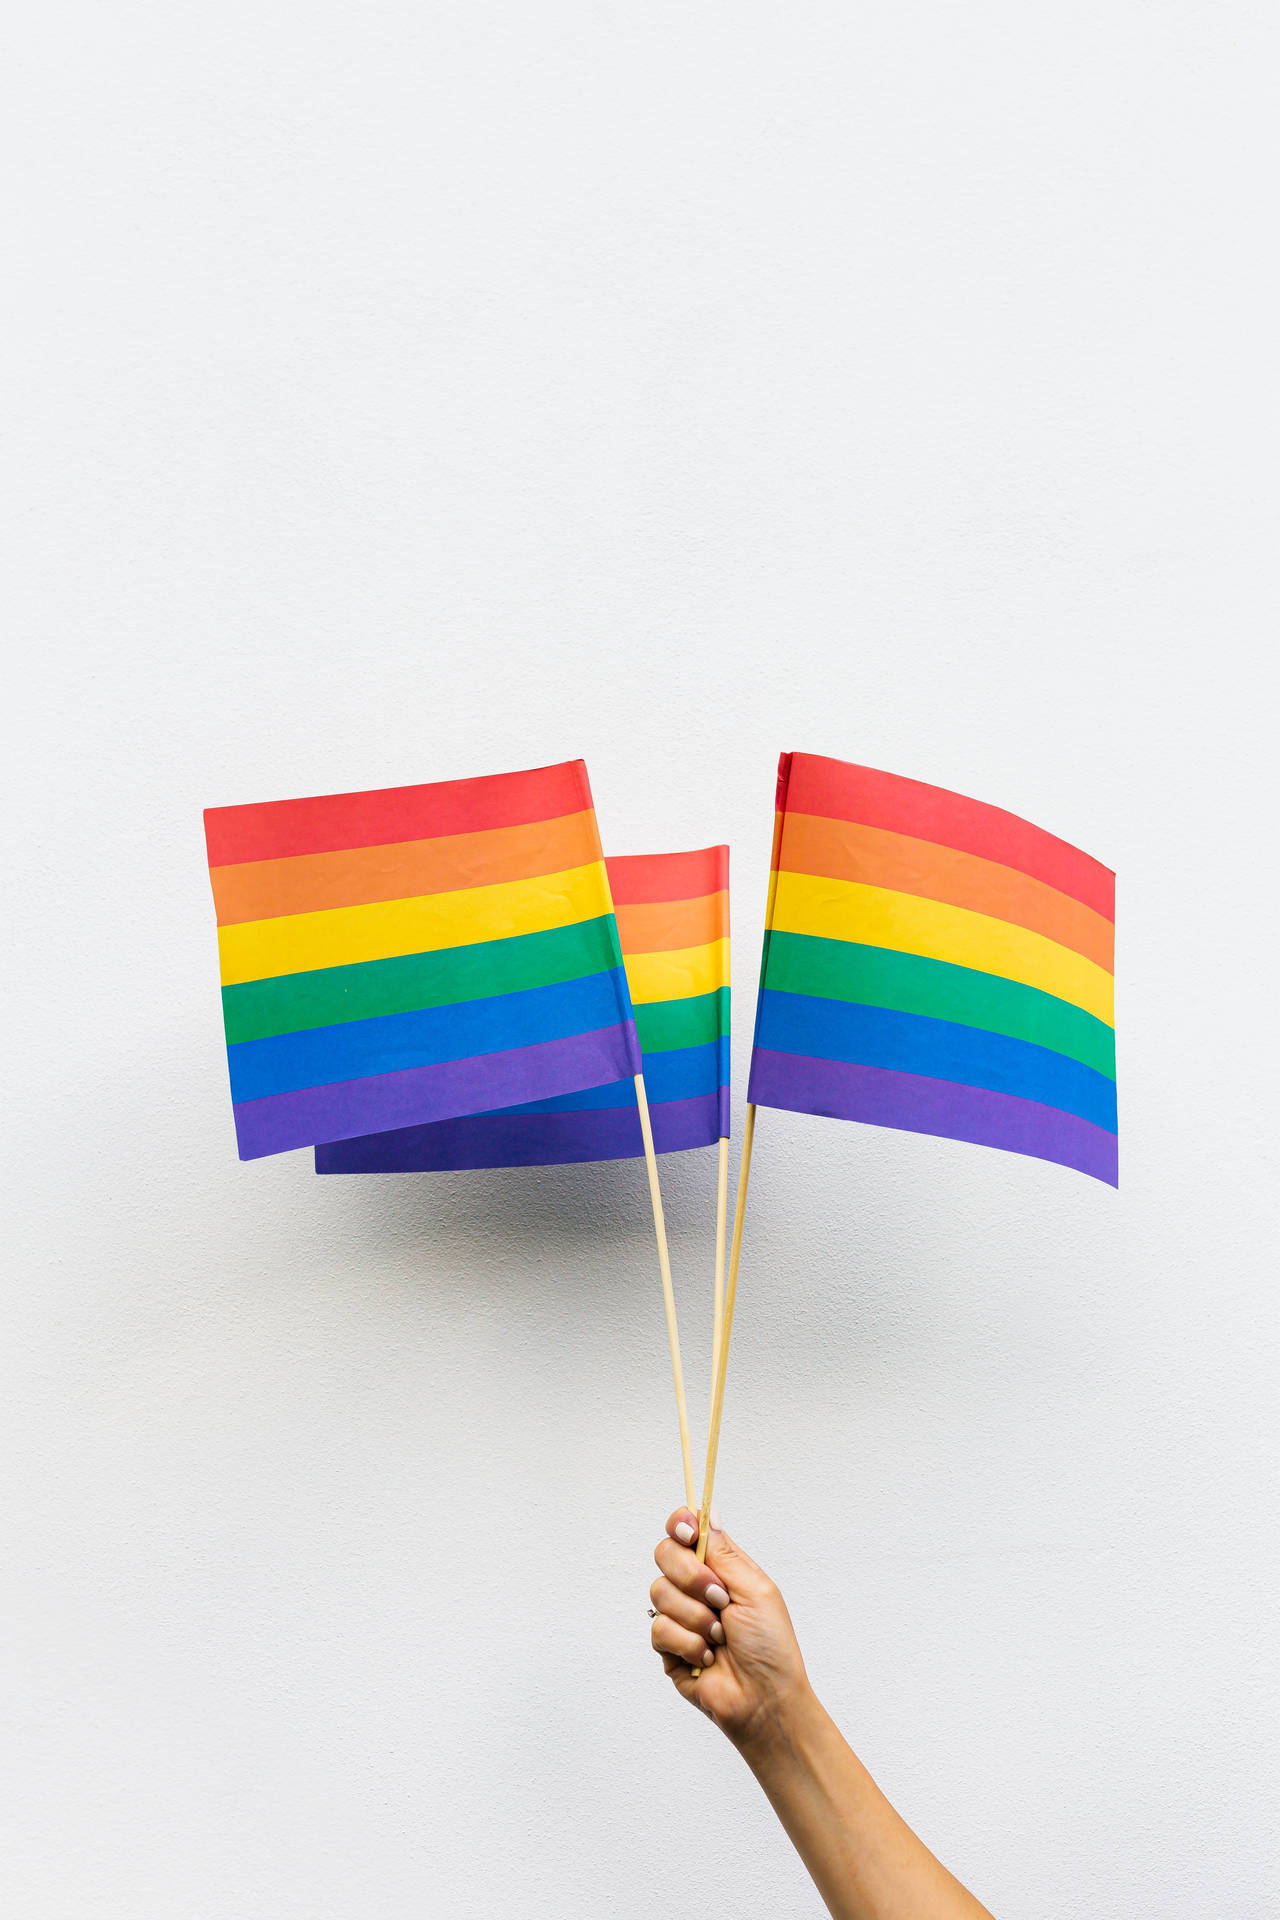 Vibrant Colors Of Pride: The Lesbian Flag